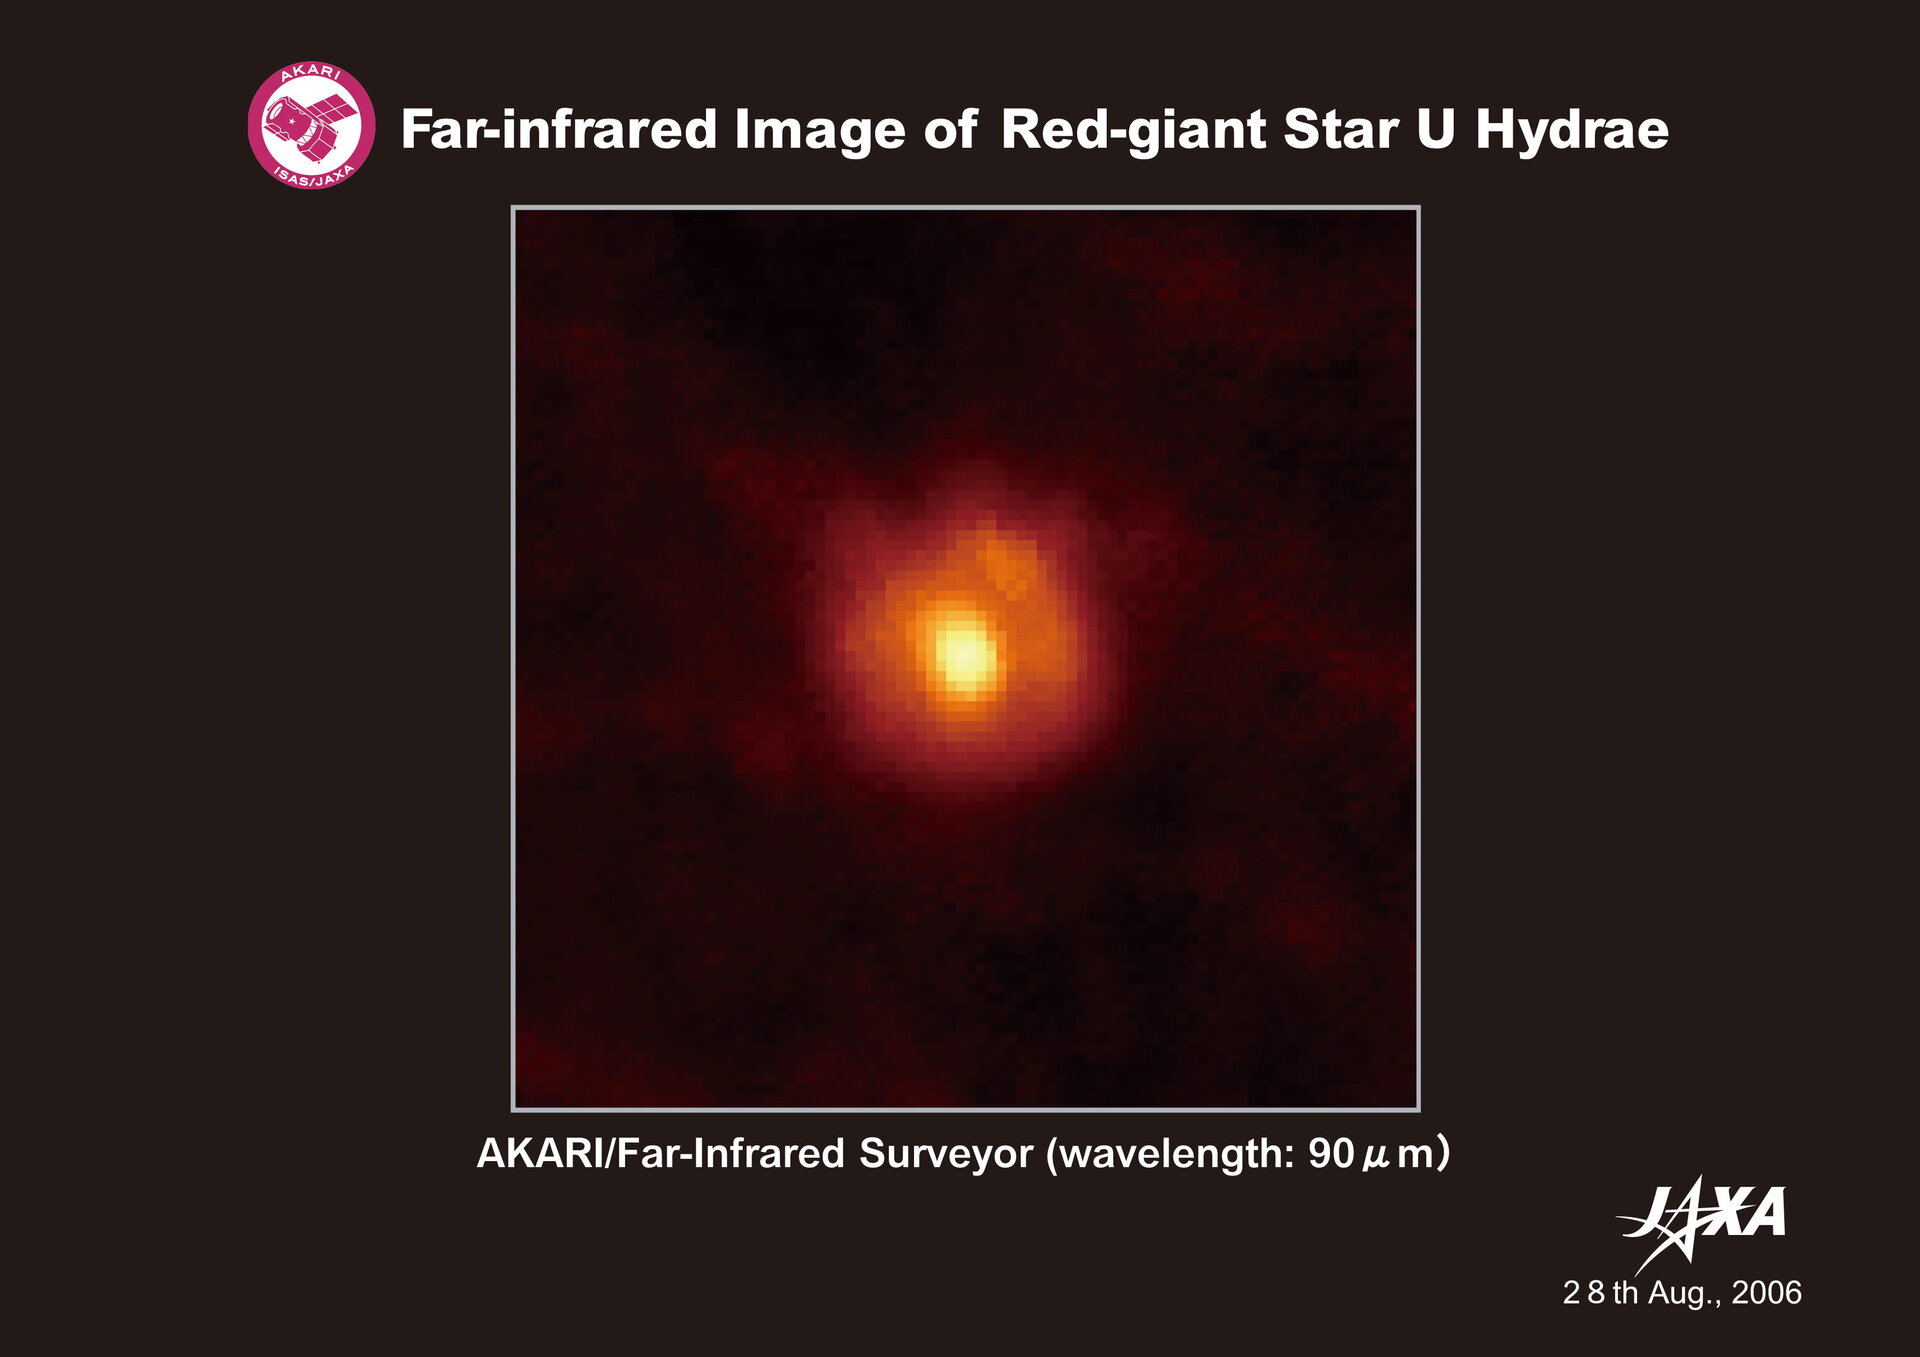 AKARI’s far-infrared image of red-giant star U Hydrae